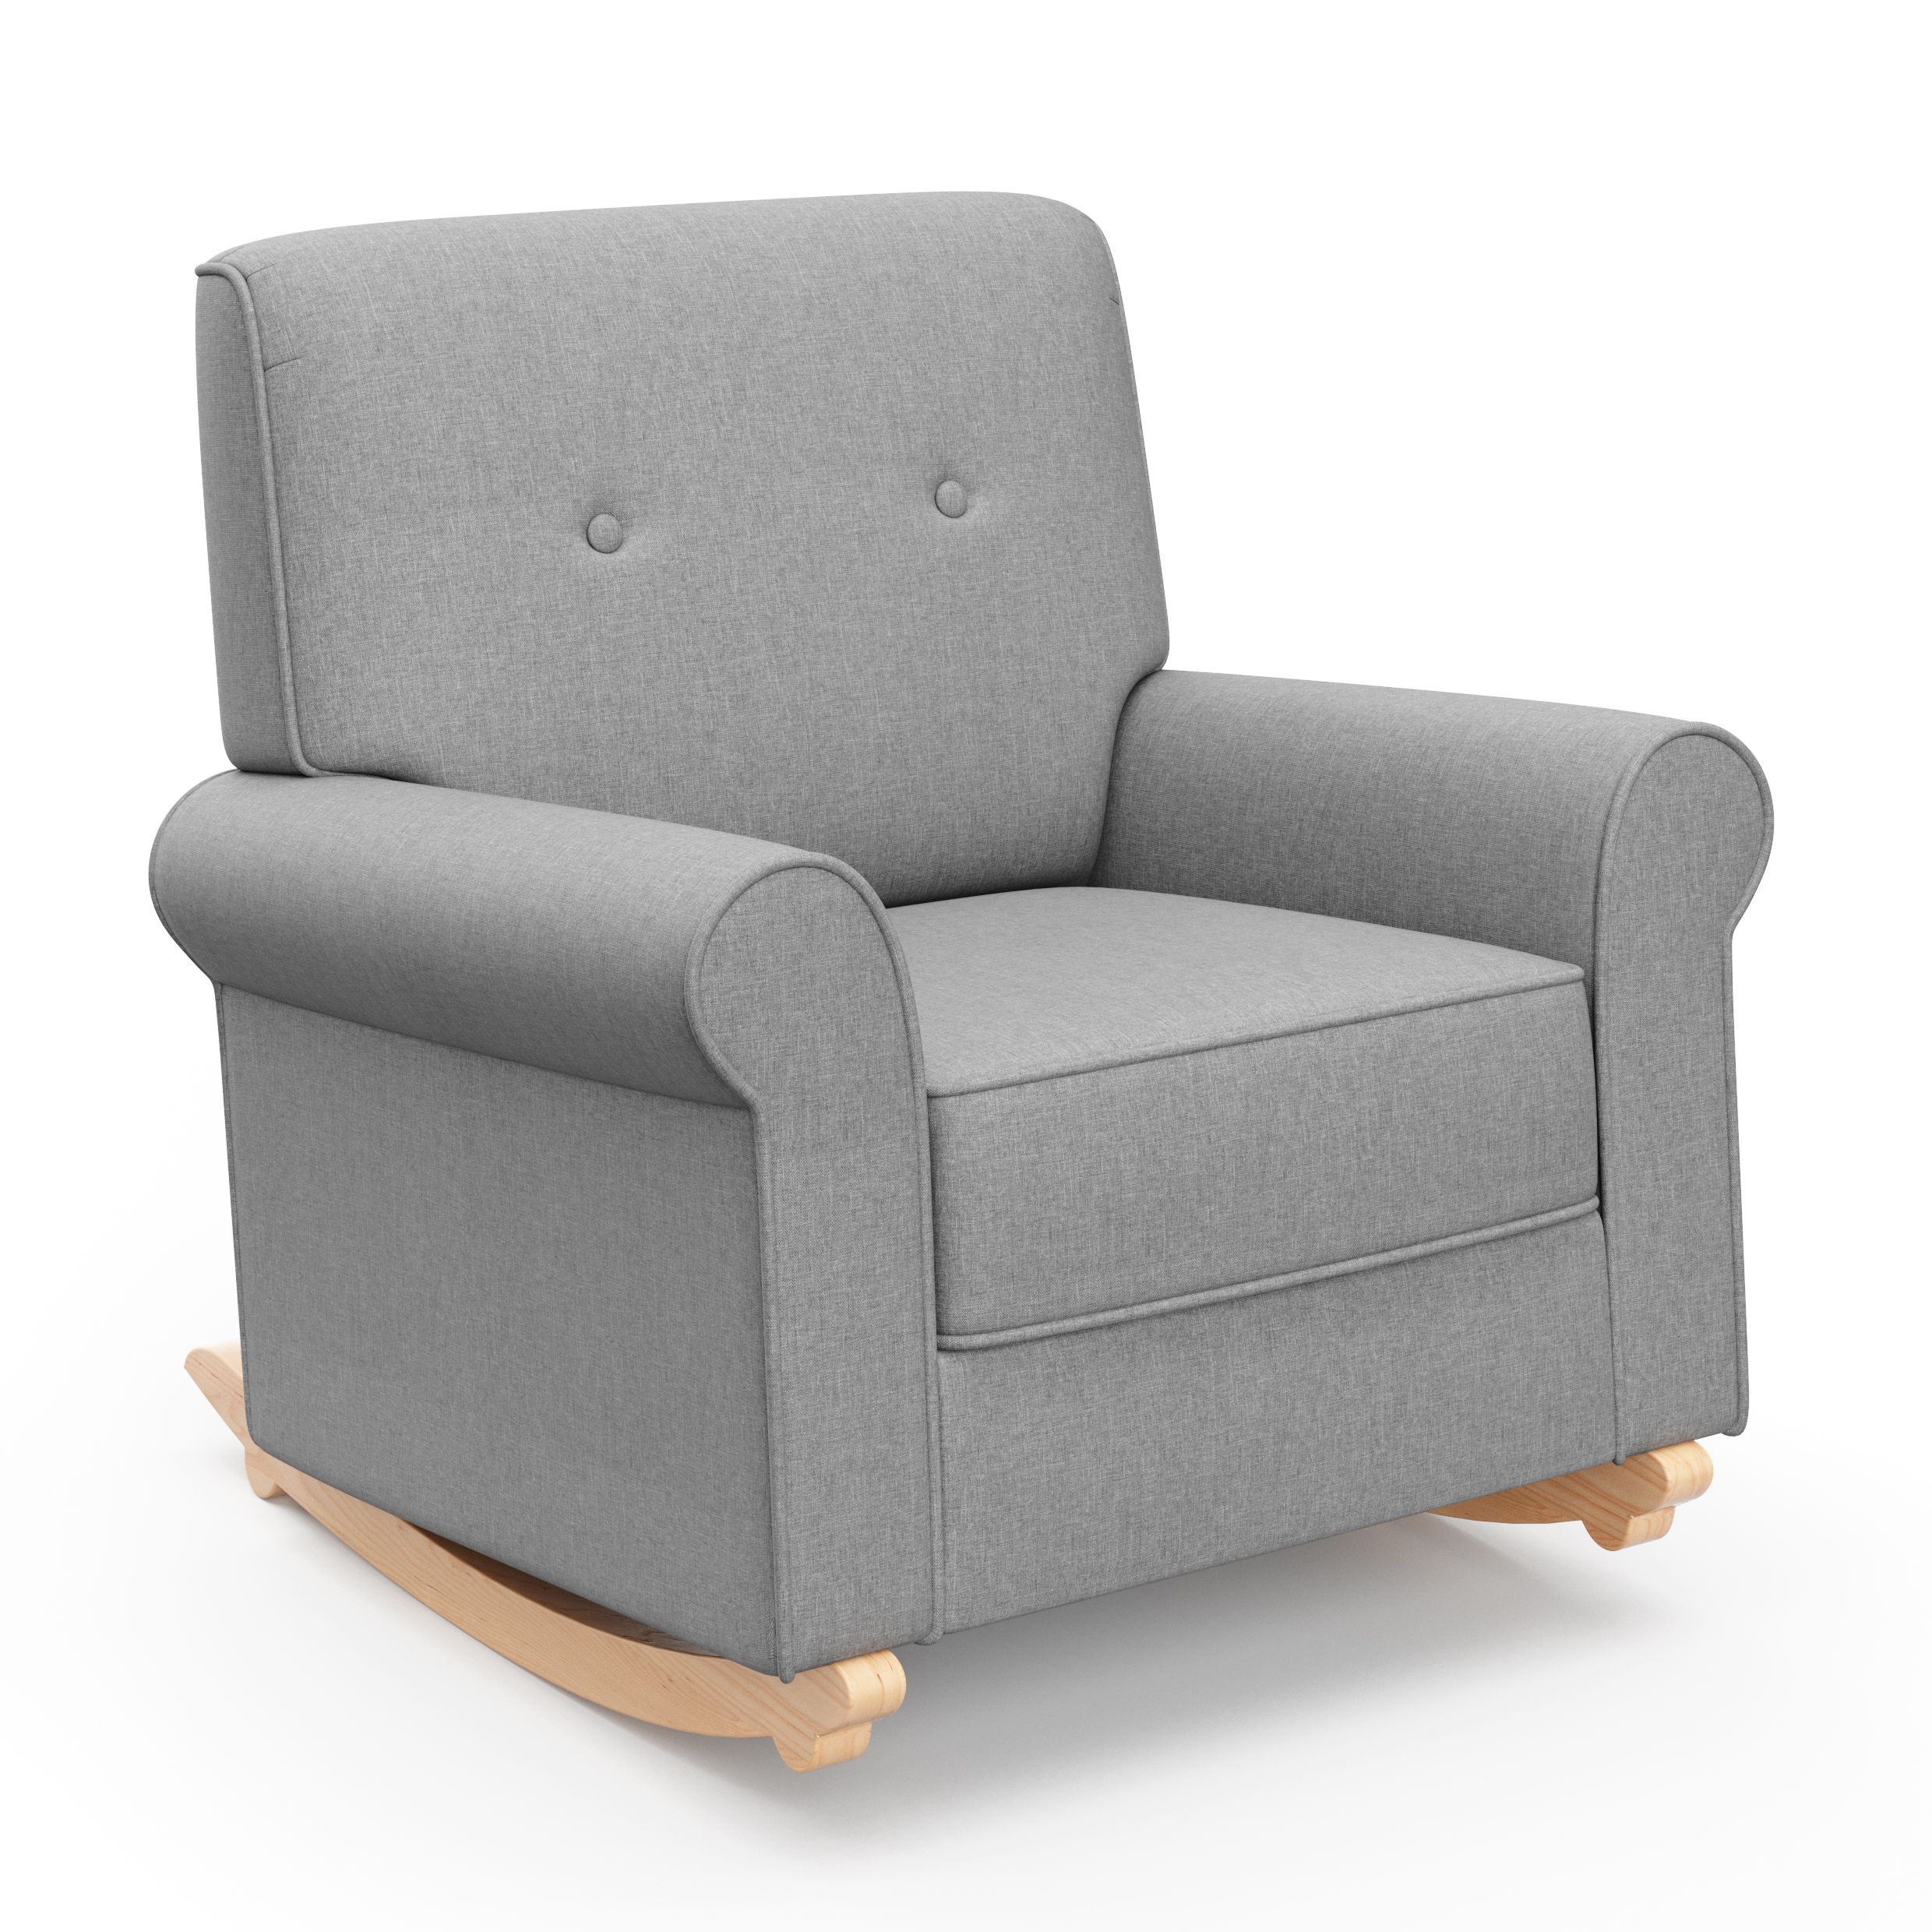 Graco Harper Poly-Linen Indoor Nursery Rocking Chair, Horizon Gray - image 1 of 6